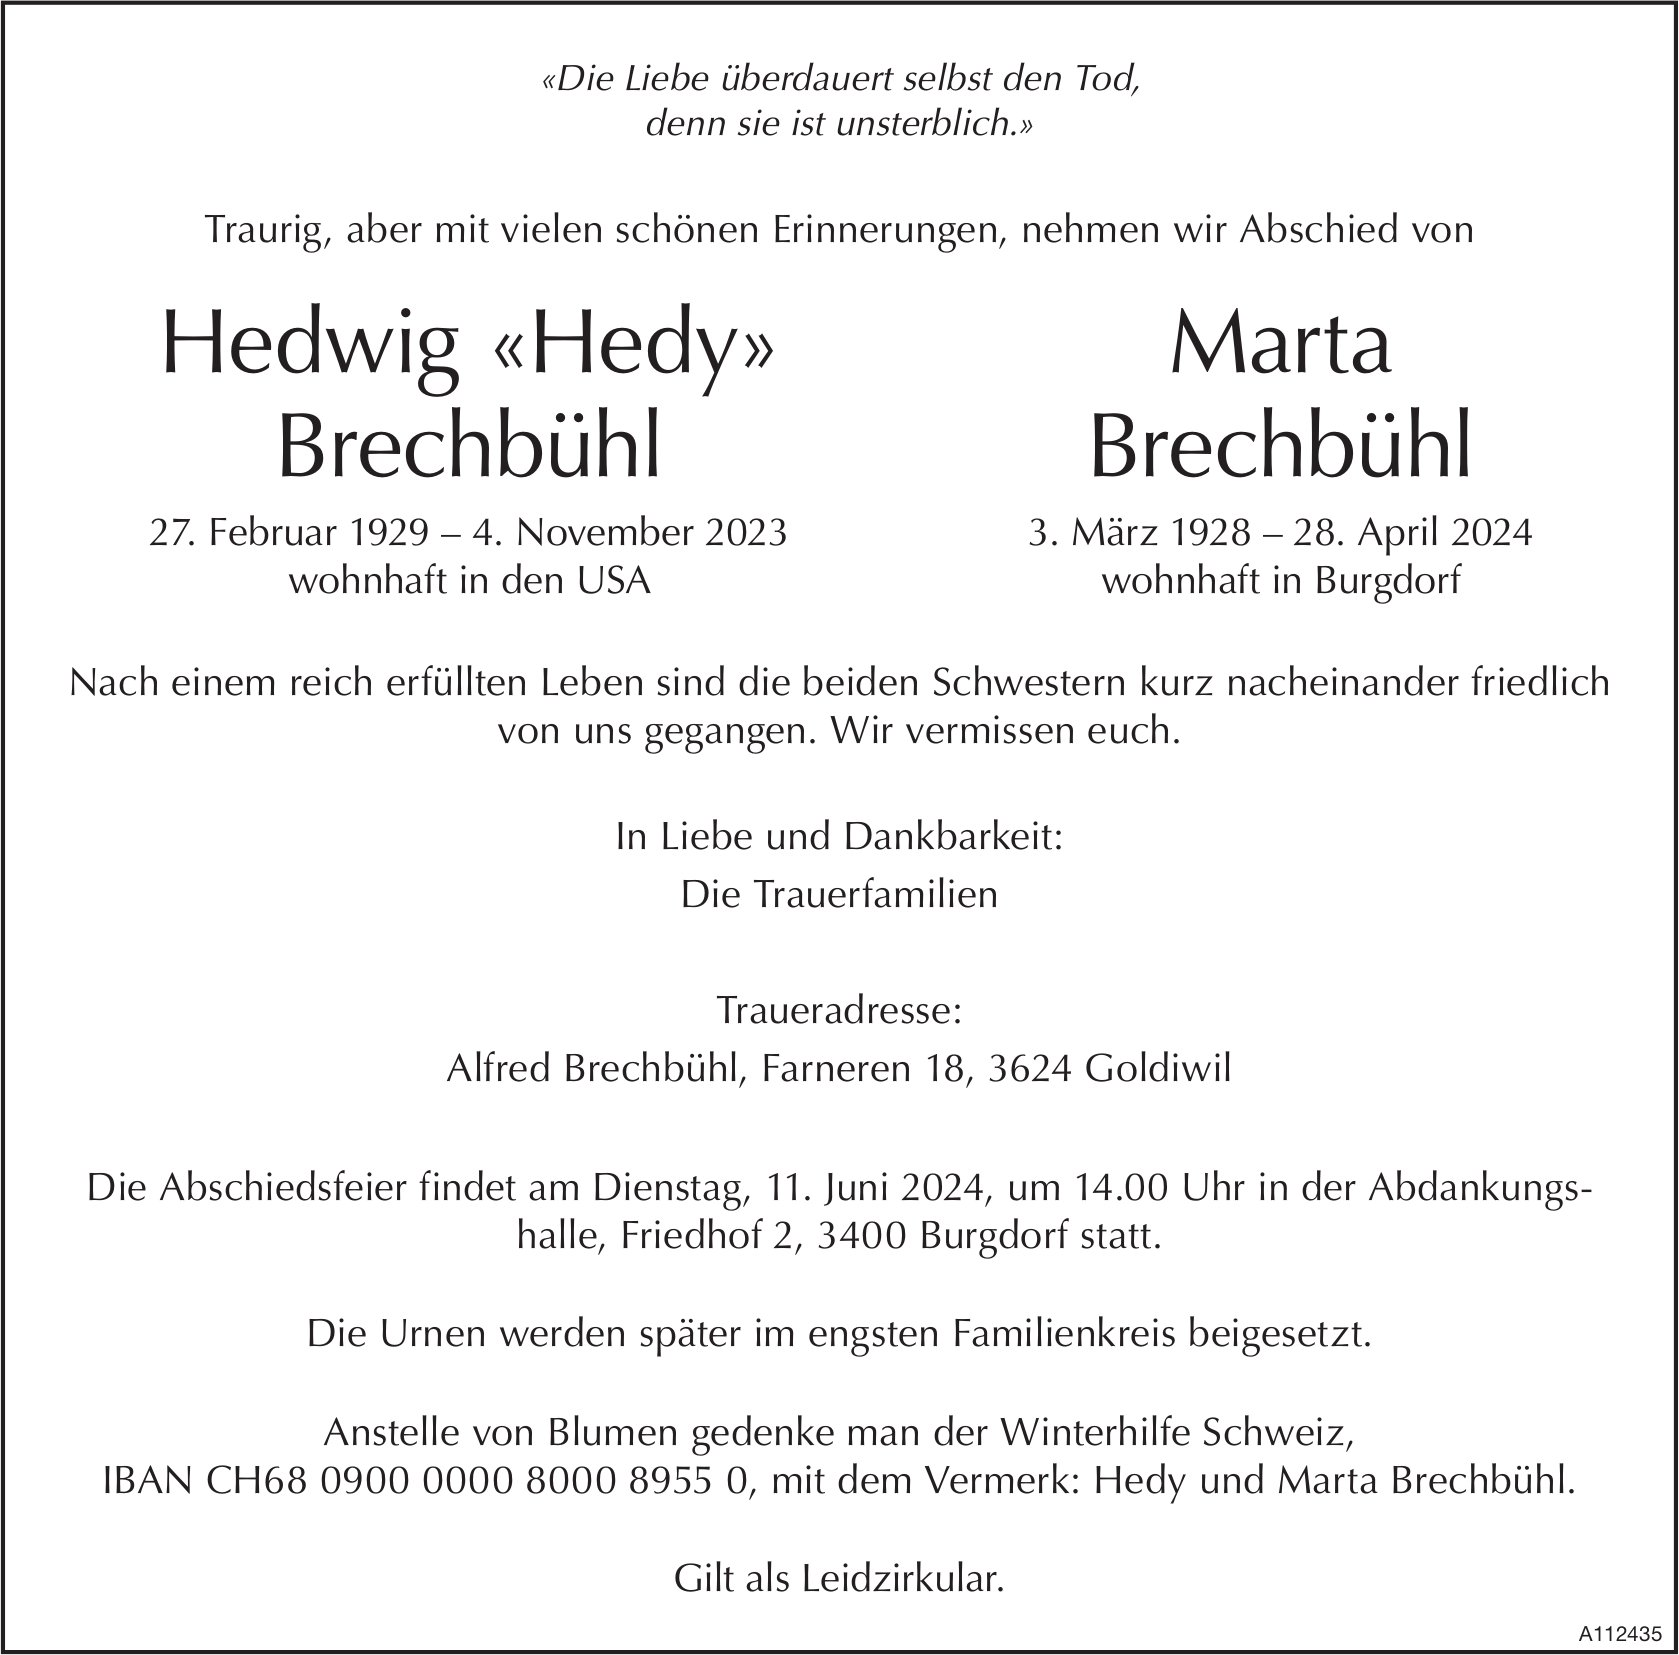 Hedwig «Hedy» Brechbühl & Marta Brechbühl, April 2024 / TA